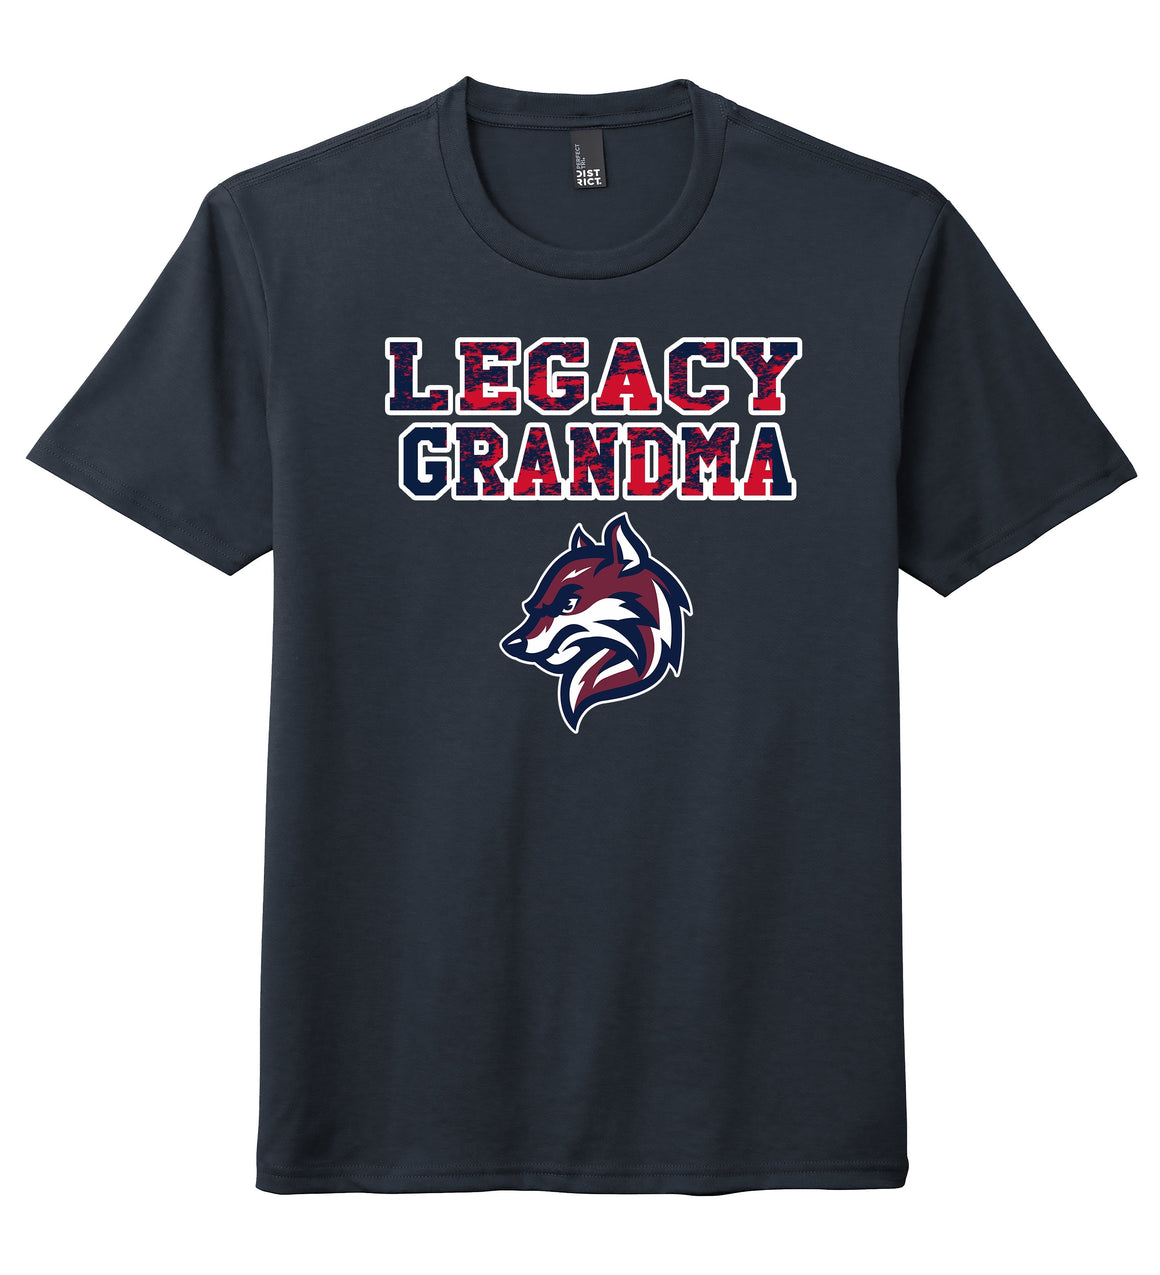 Legacy Traditional School Basse Secondary - Grandma Shirt